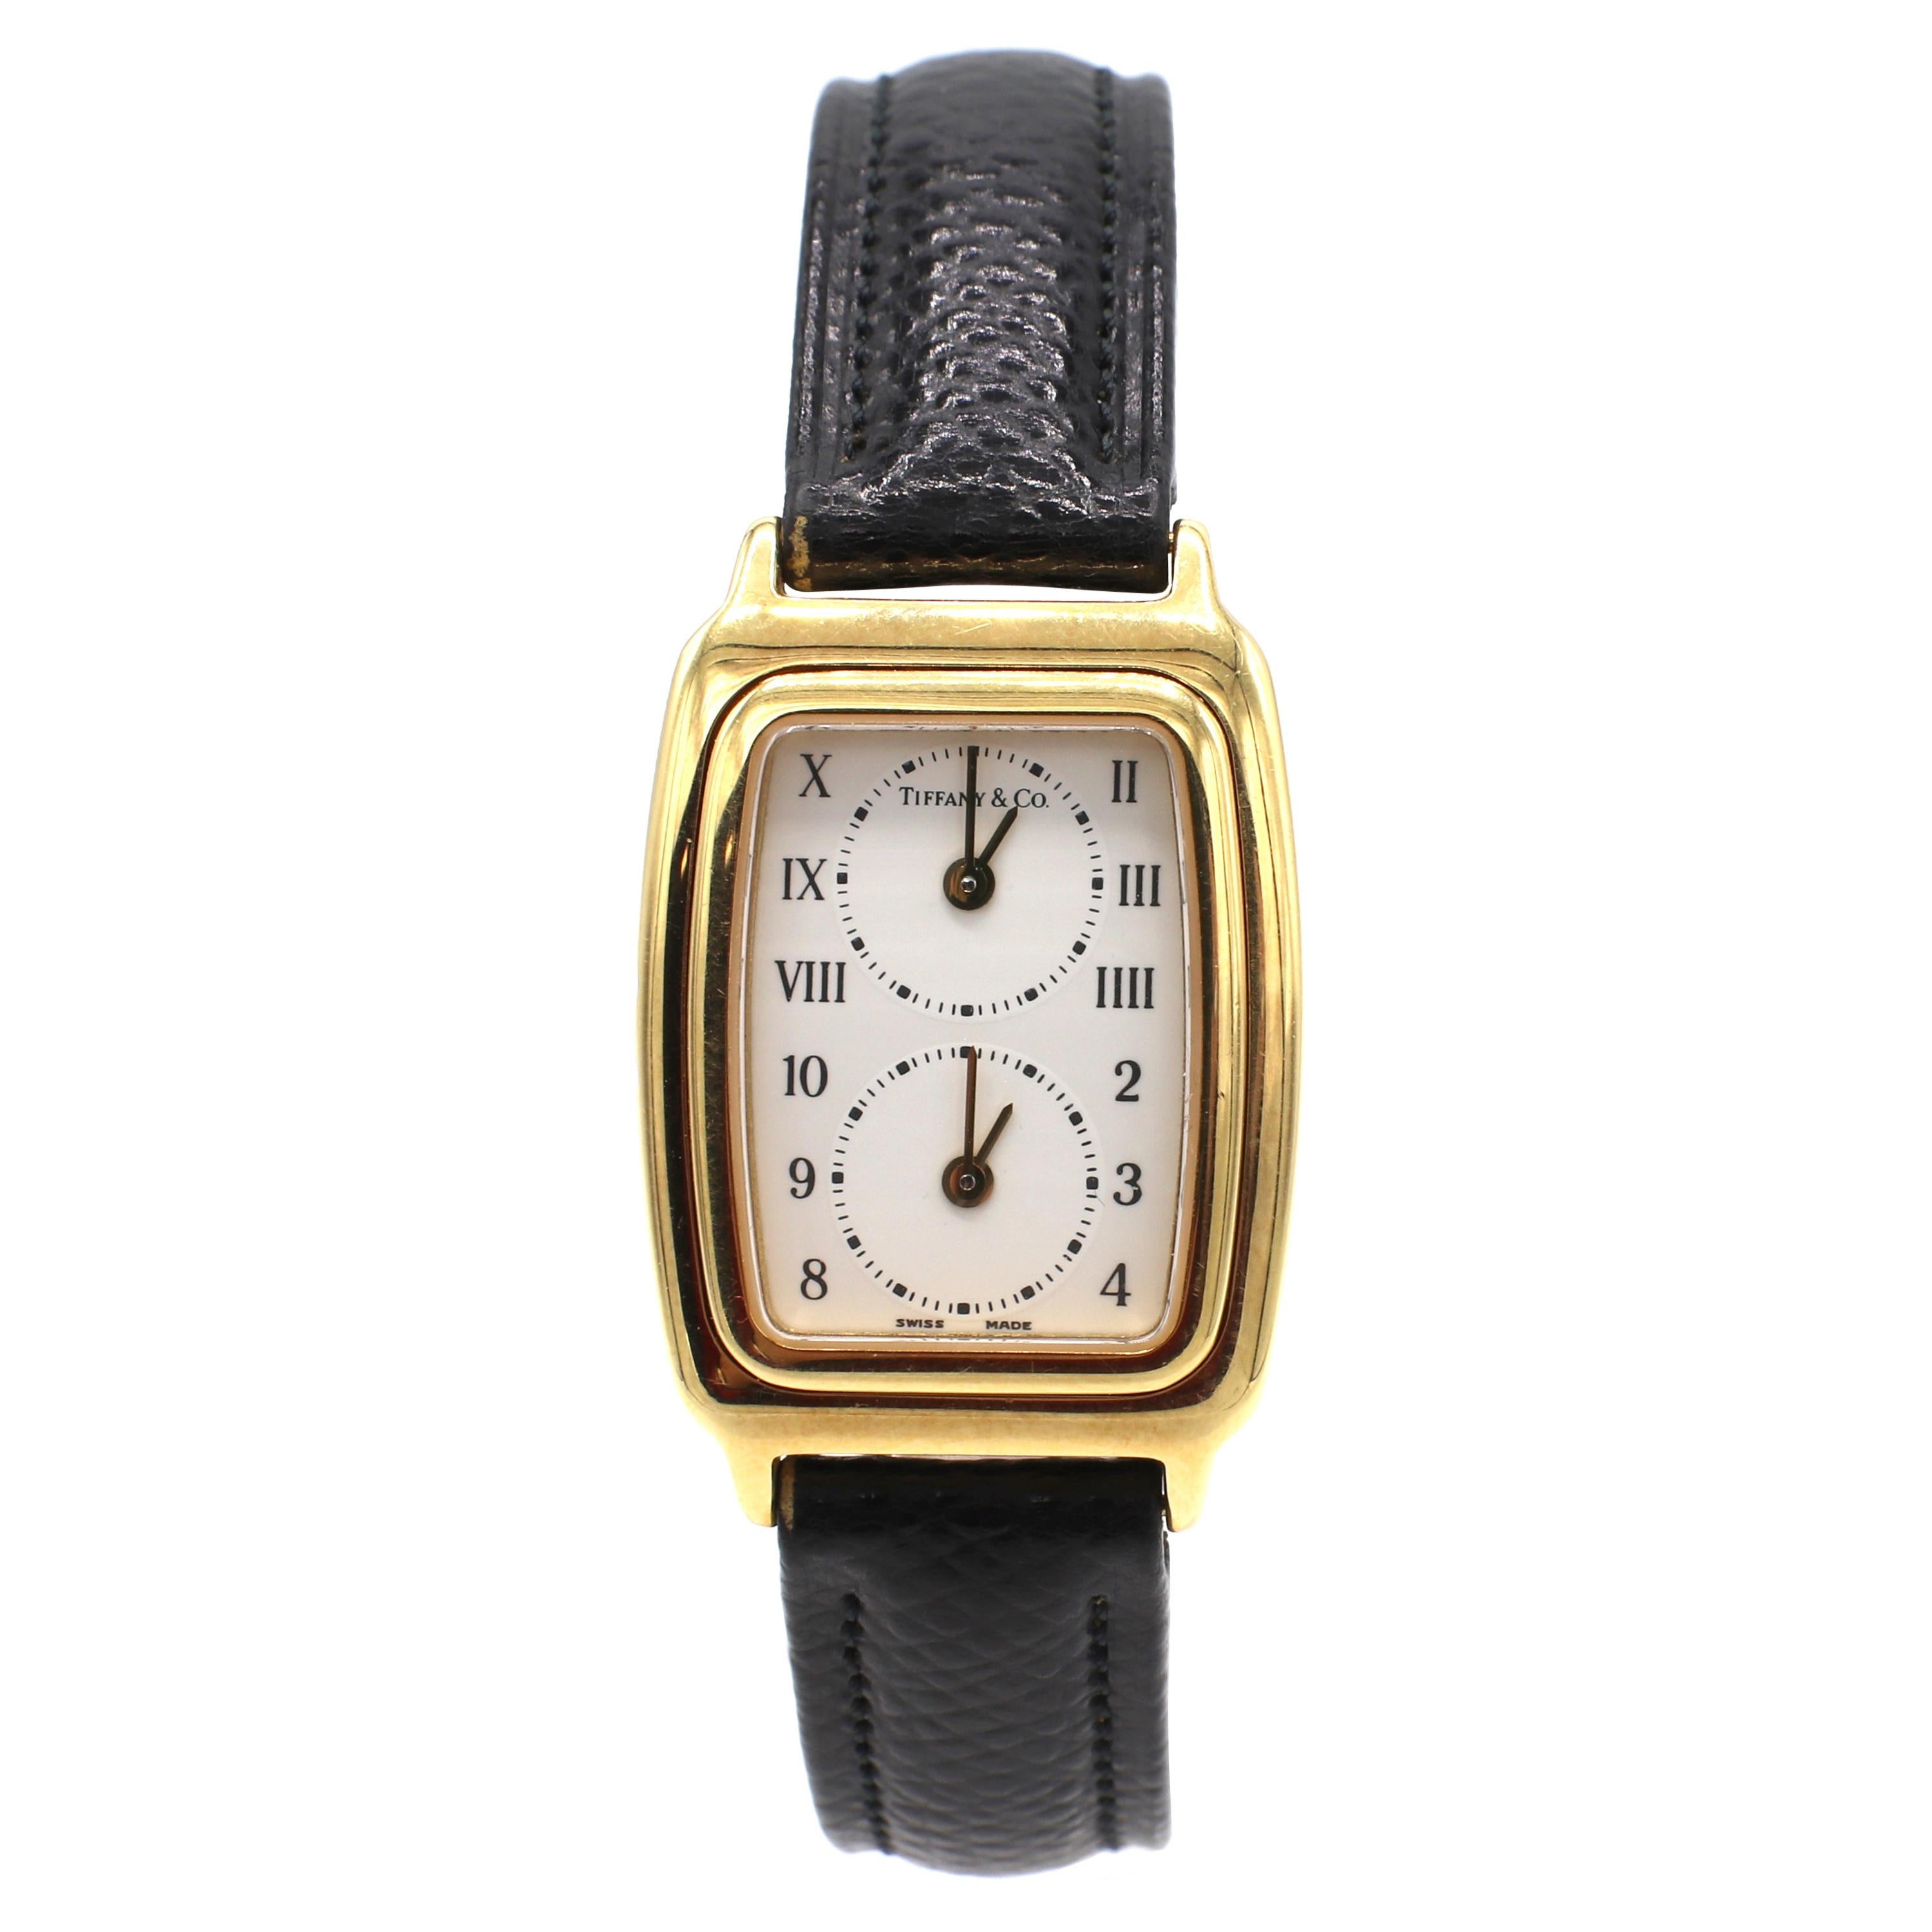 Tiffany & Co. 18 Karat Yellow Gold Tank Dual Time Zone Watch L203